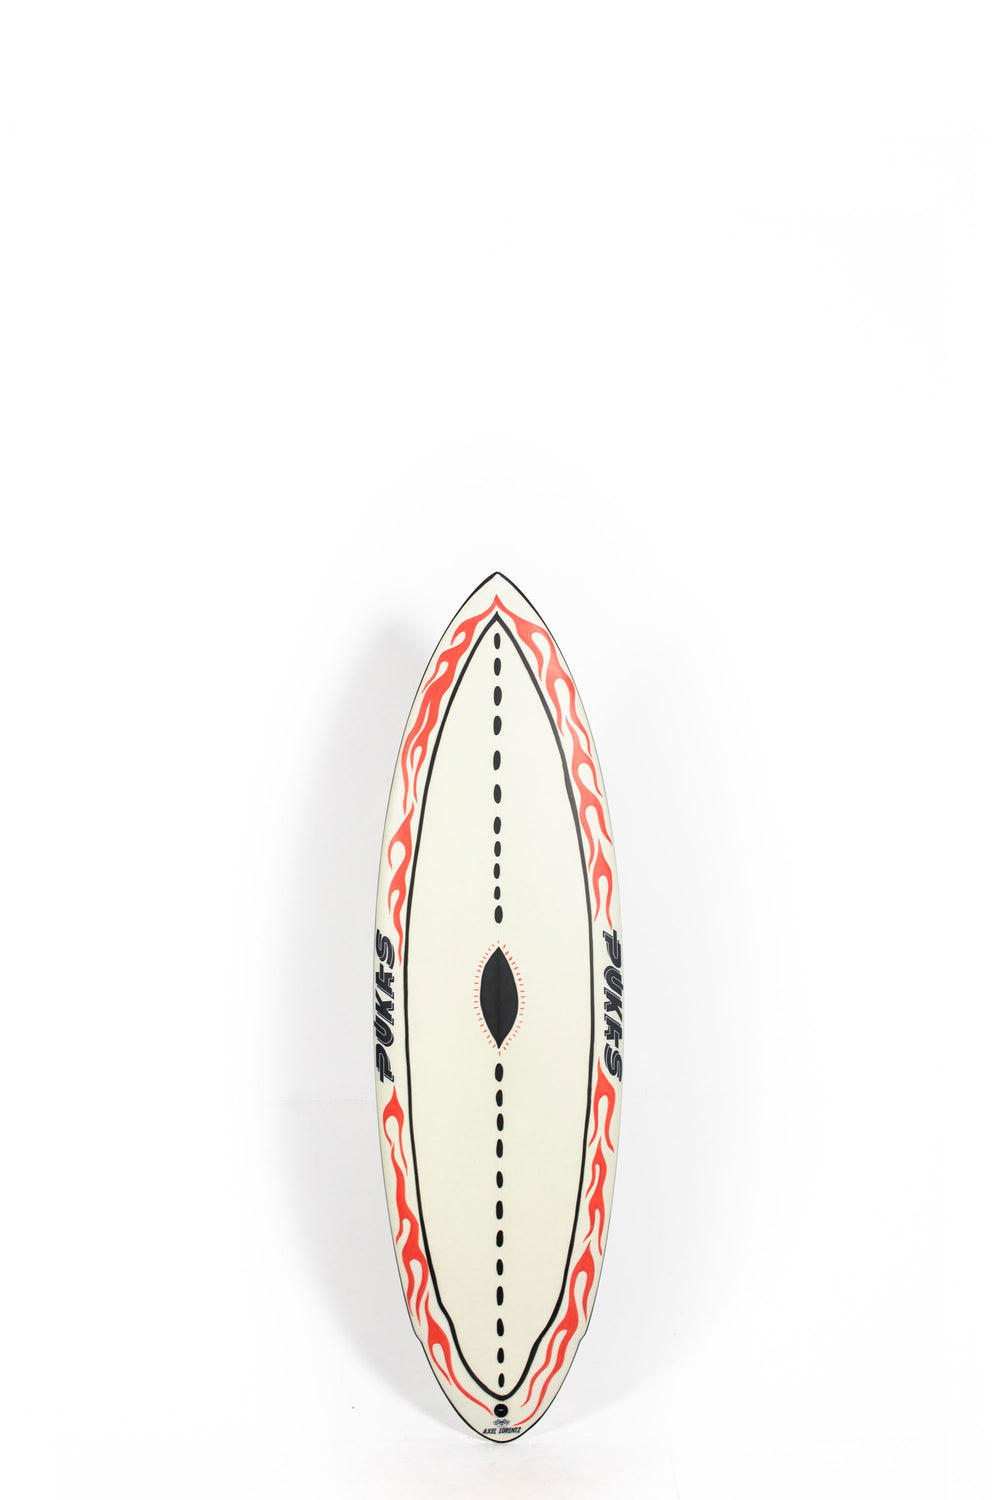 Pukas surf Shop - Copia de Pukas Surfboards - ACID PLAN by Axel Lorentz - 5'6